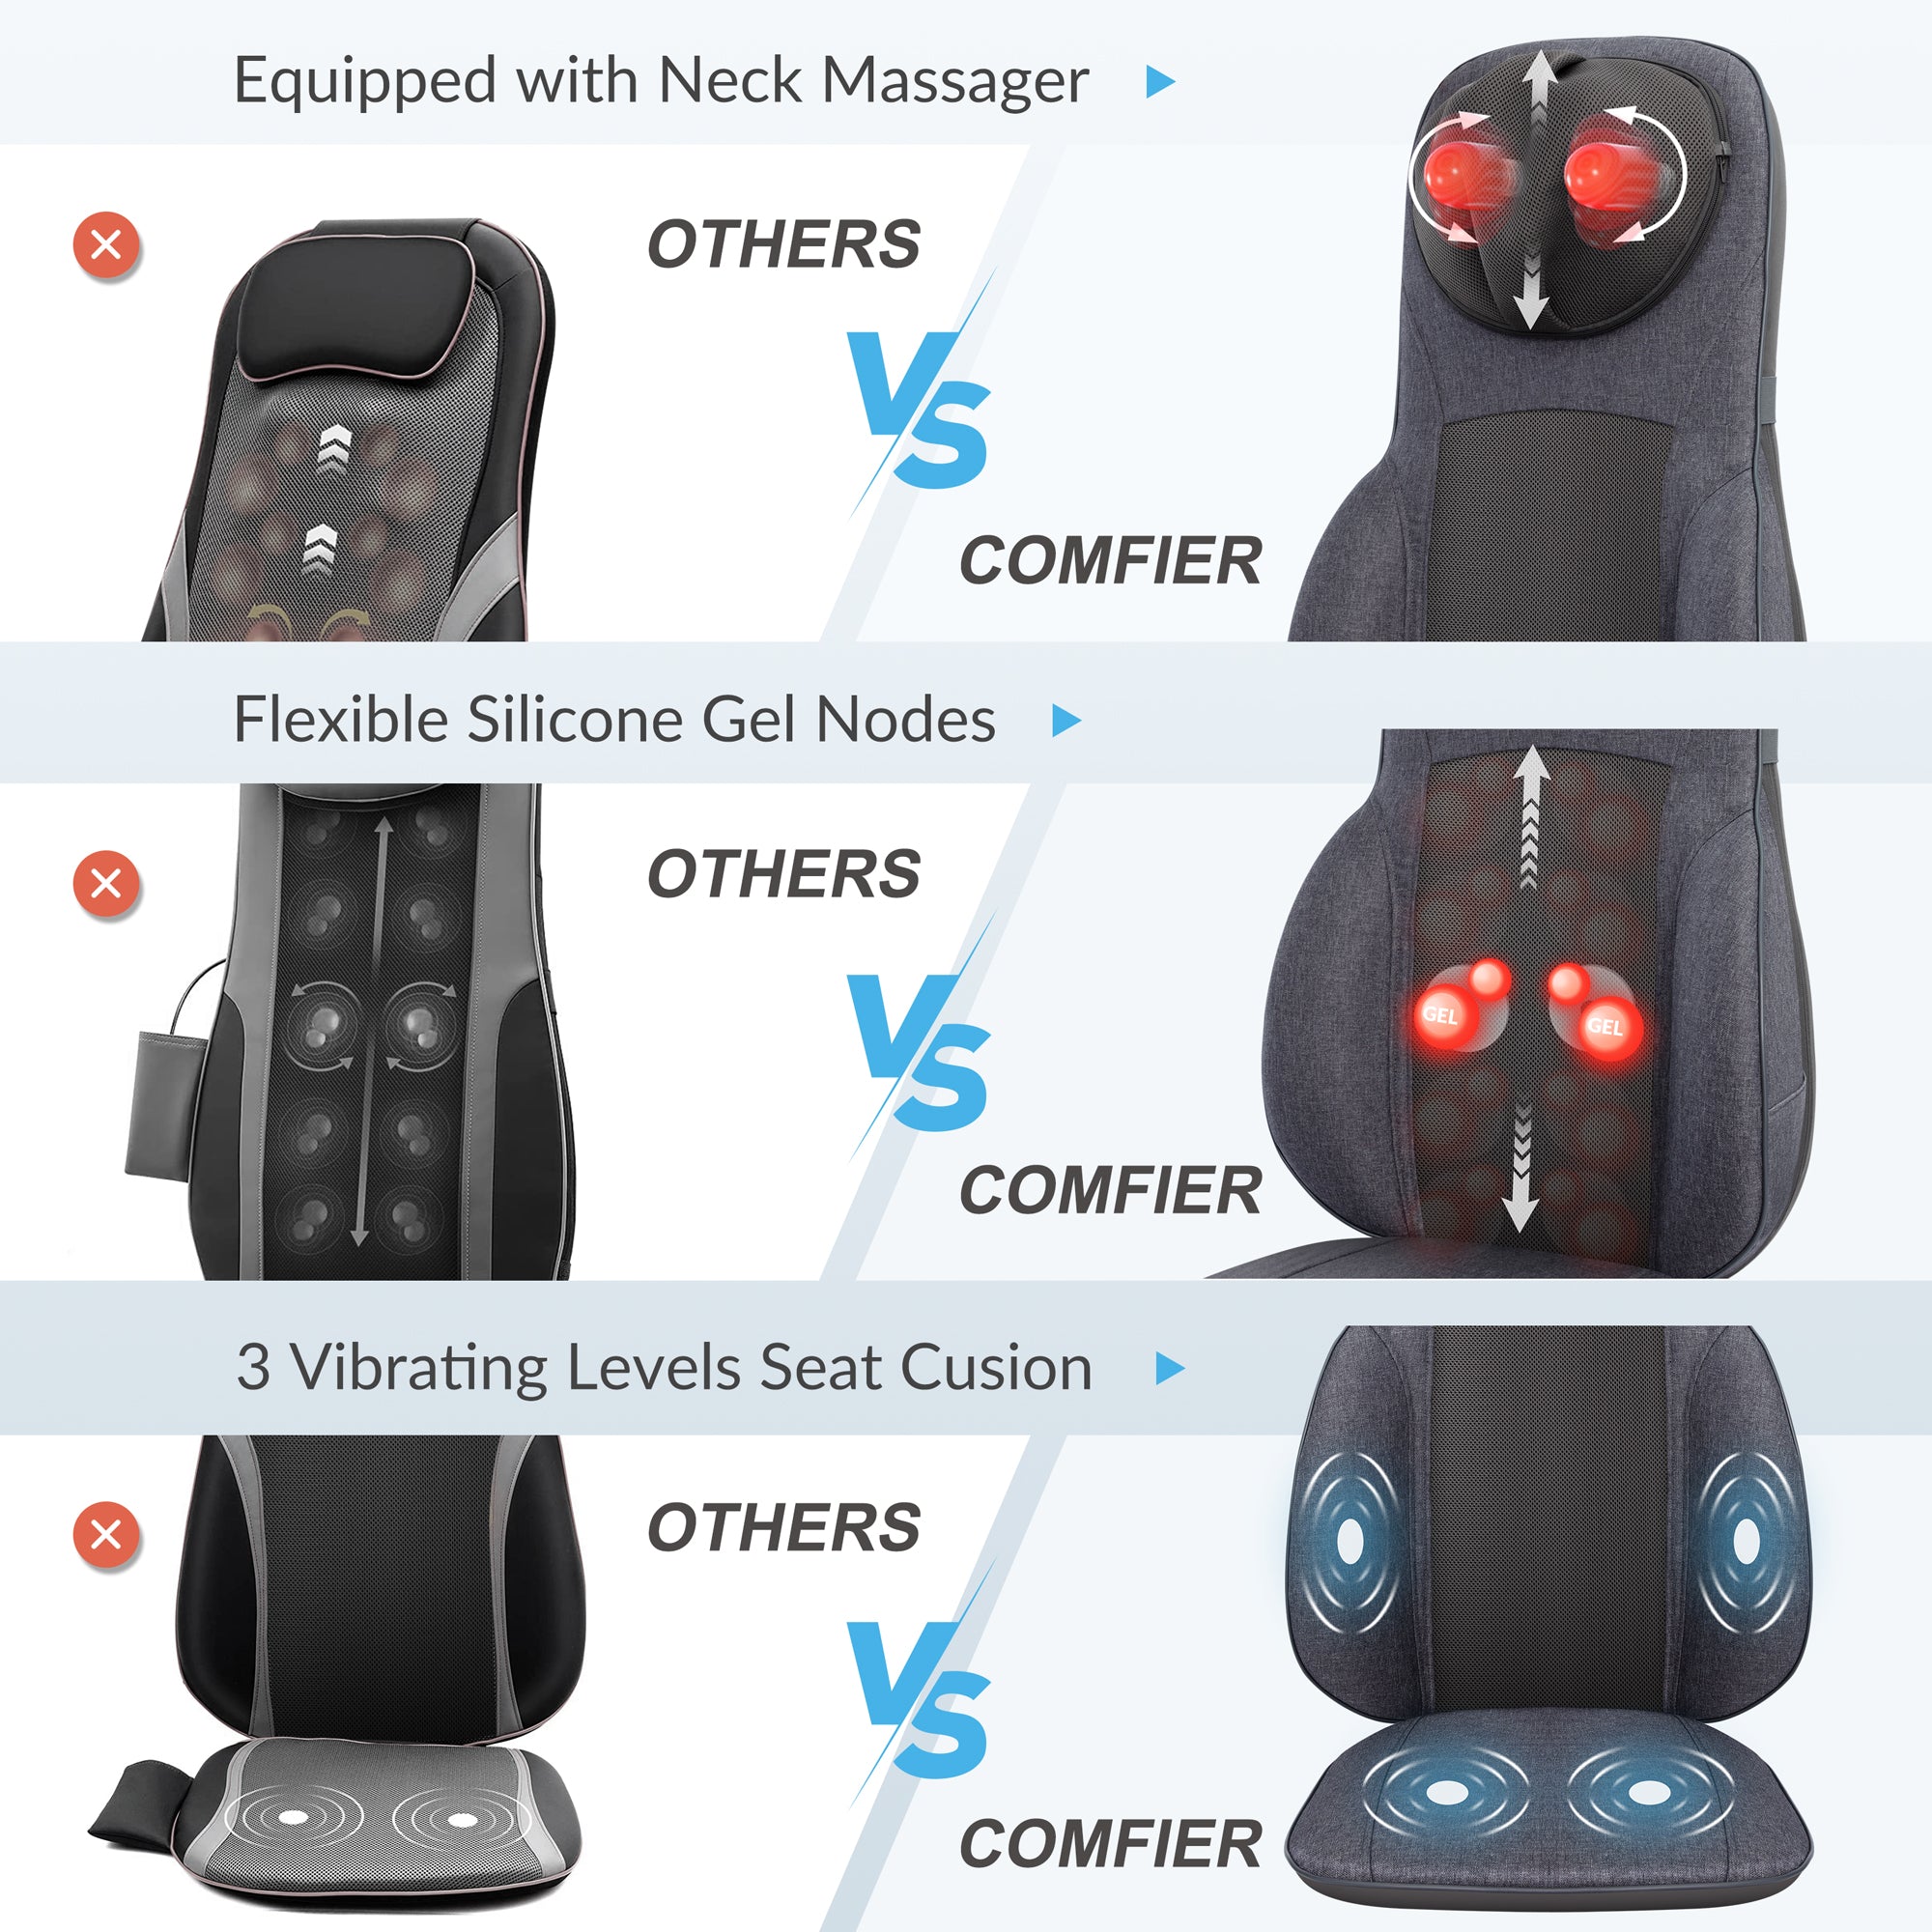 Comfier Shiatsu Neck Back Massage Seat Cushion with Heat,(Colored pack